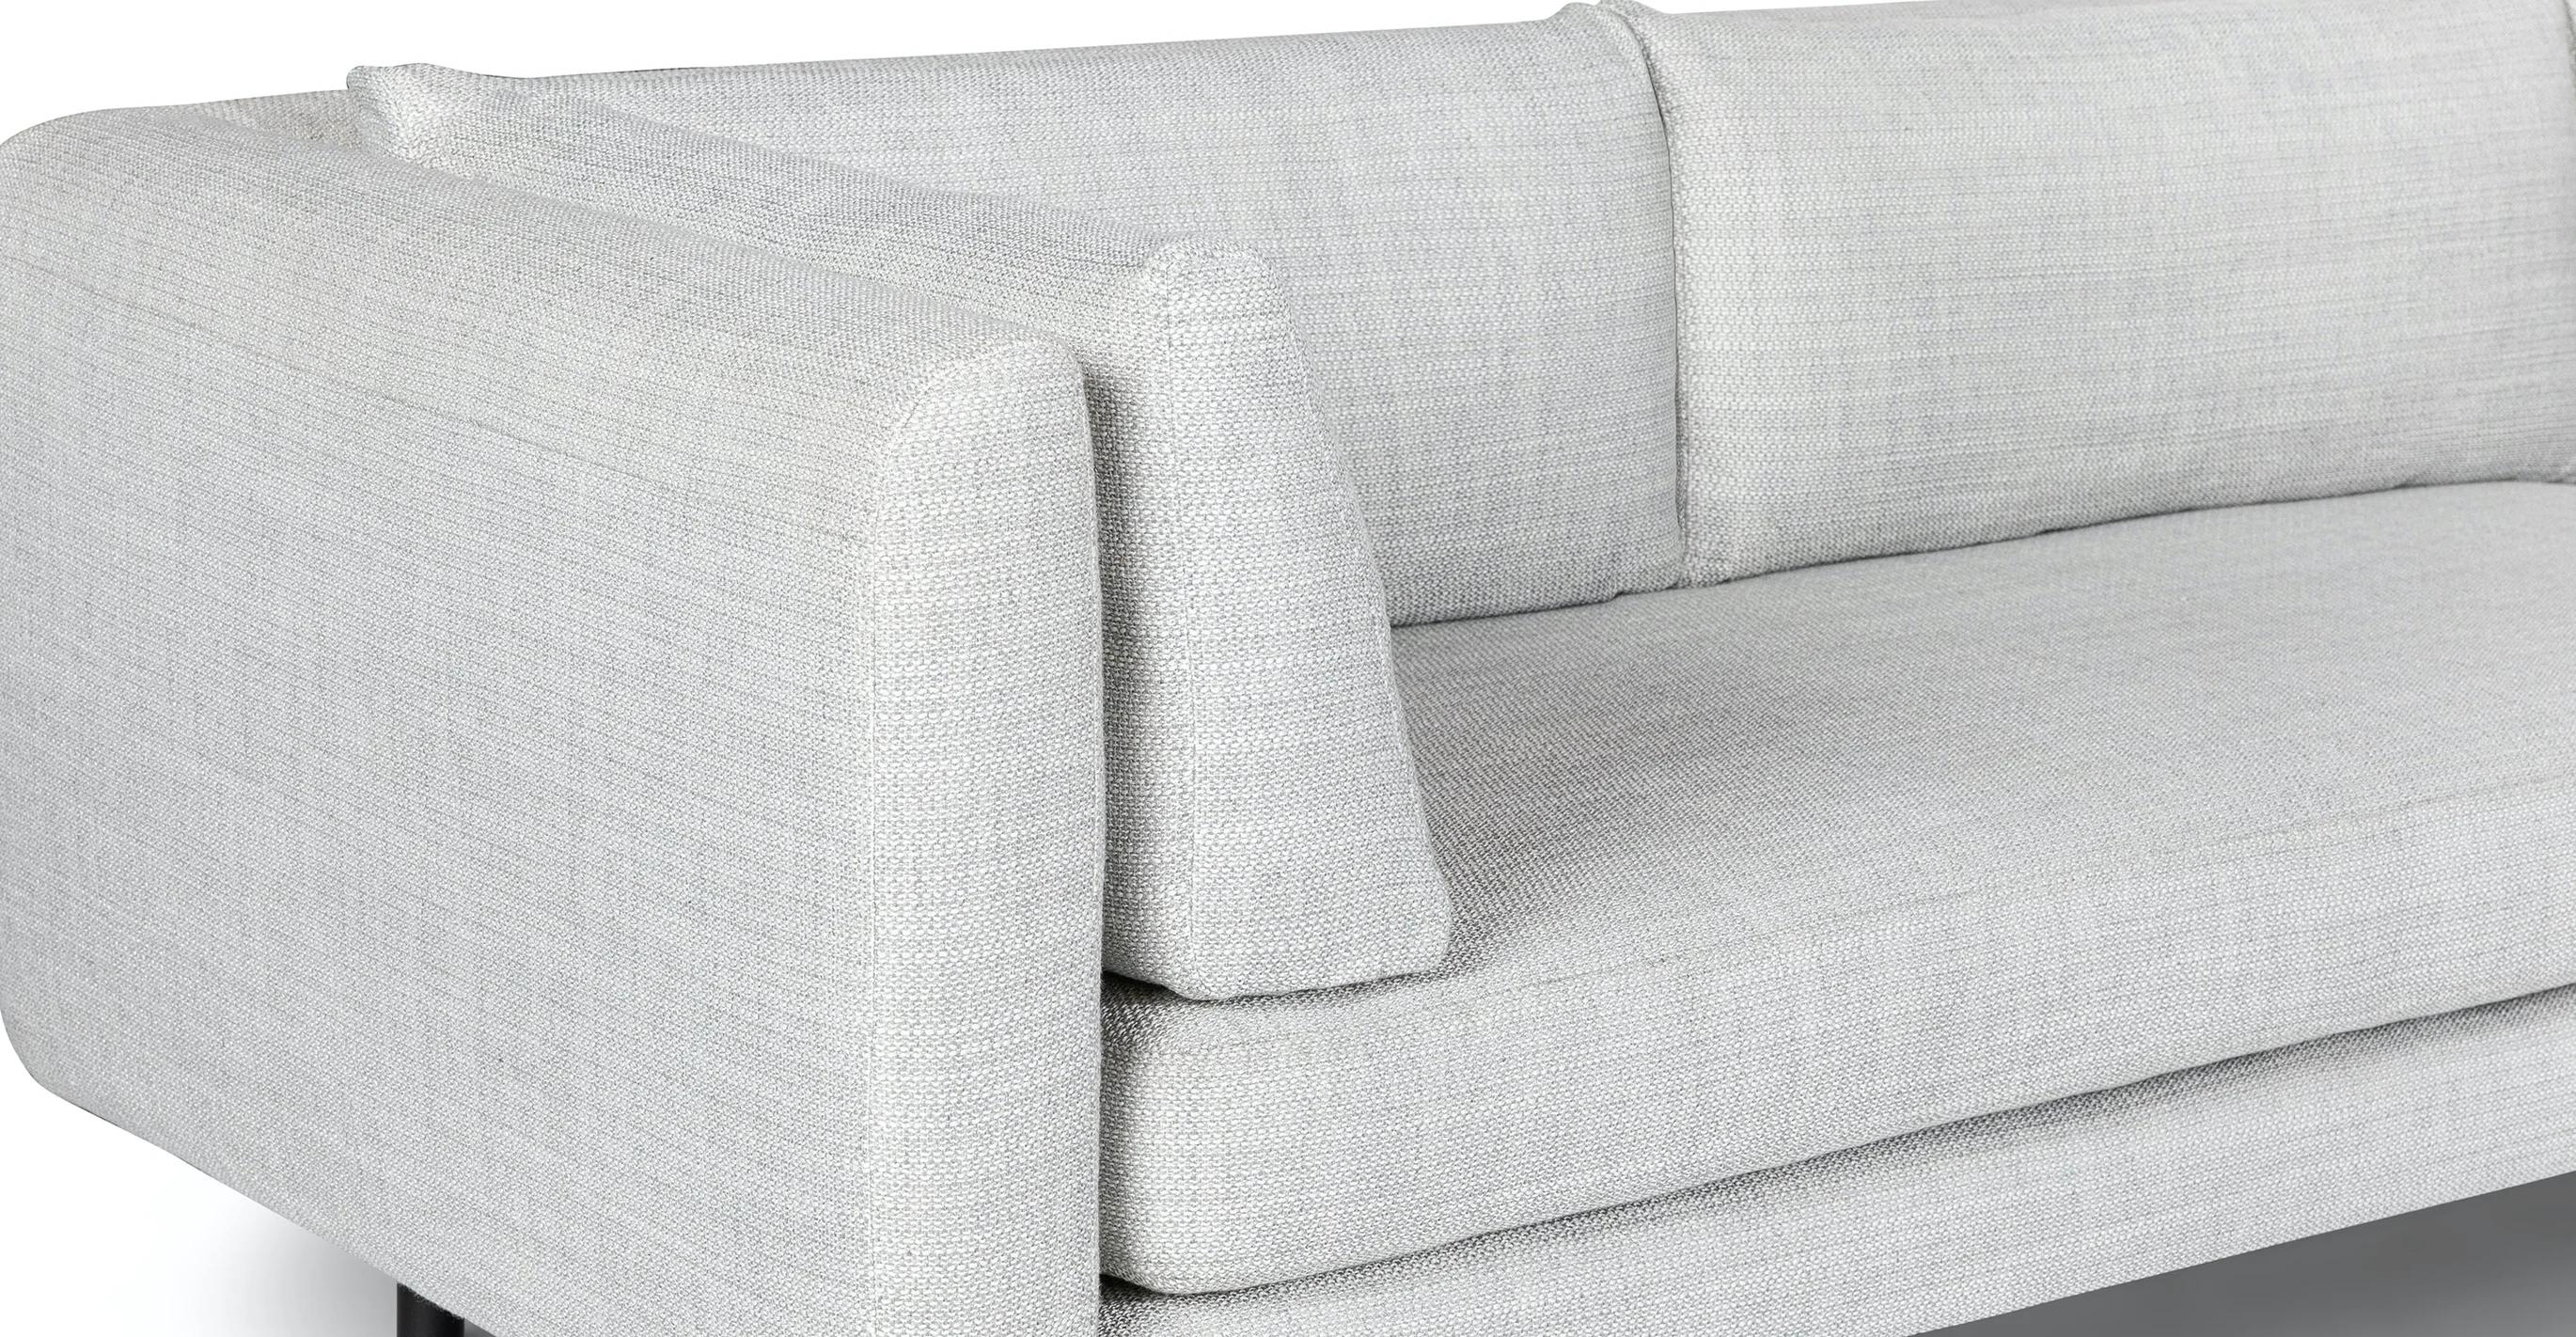 Lappi Right Sectional Sofa, Serene Gray - Image 5